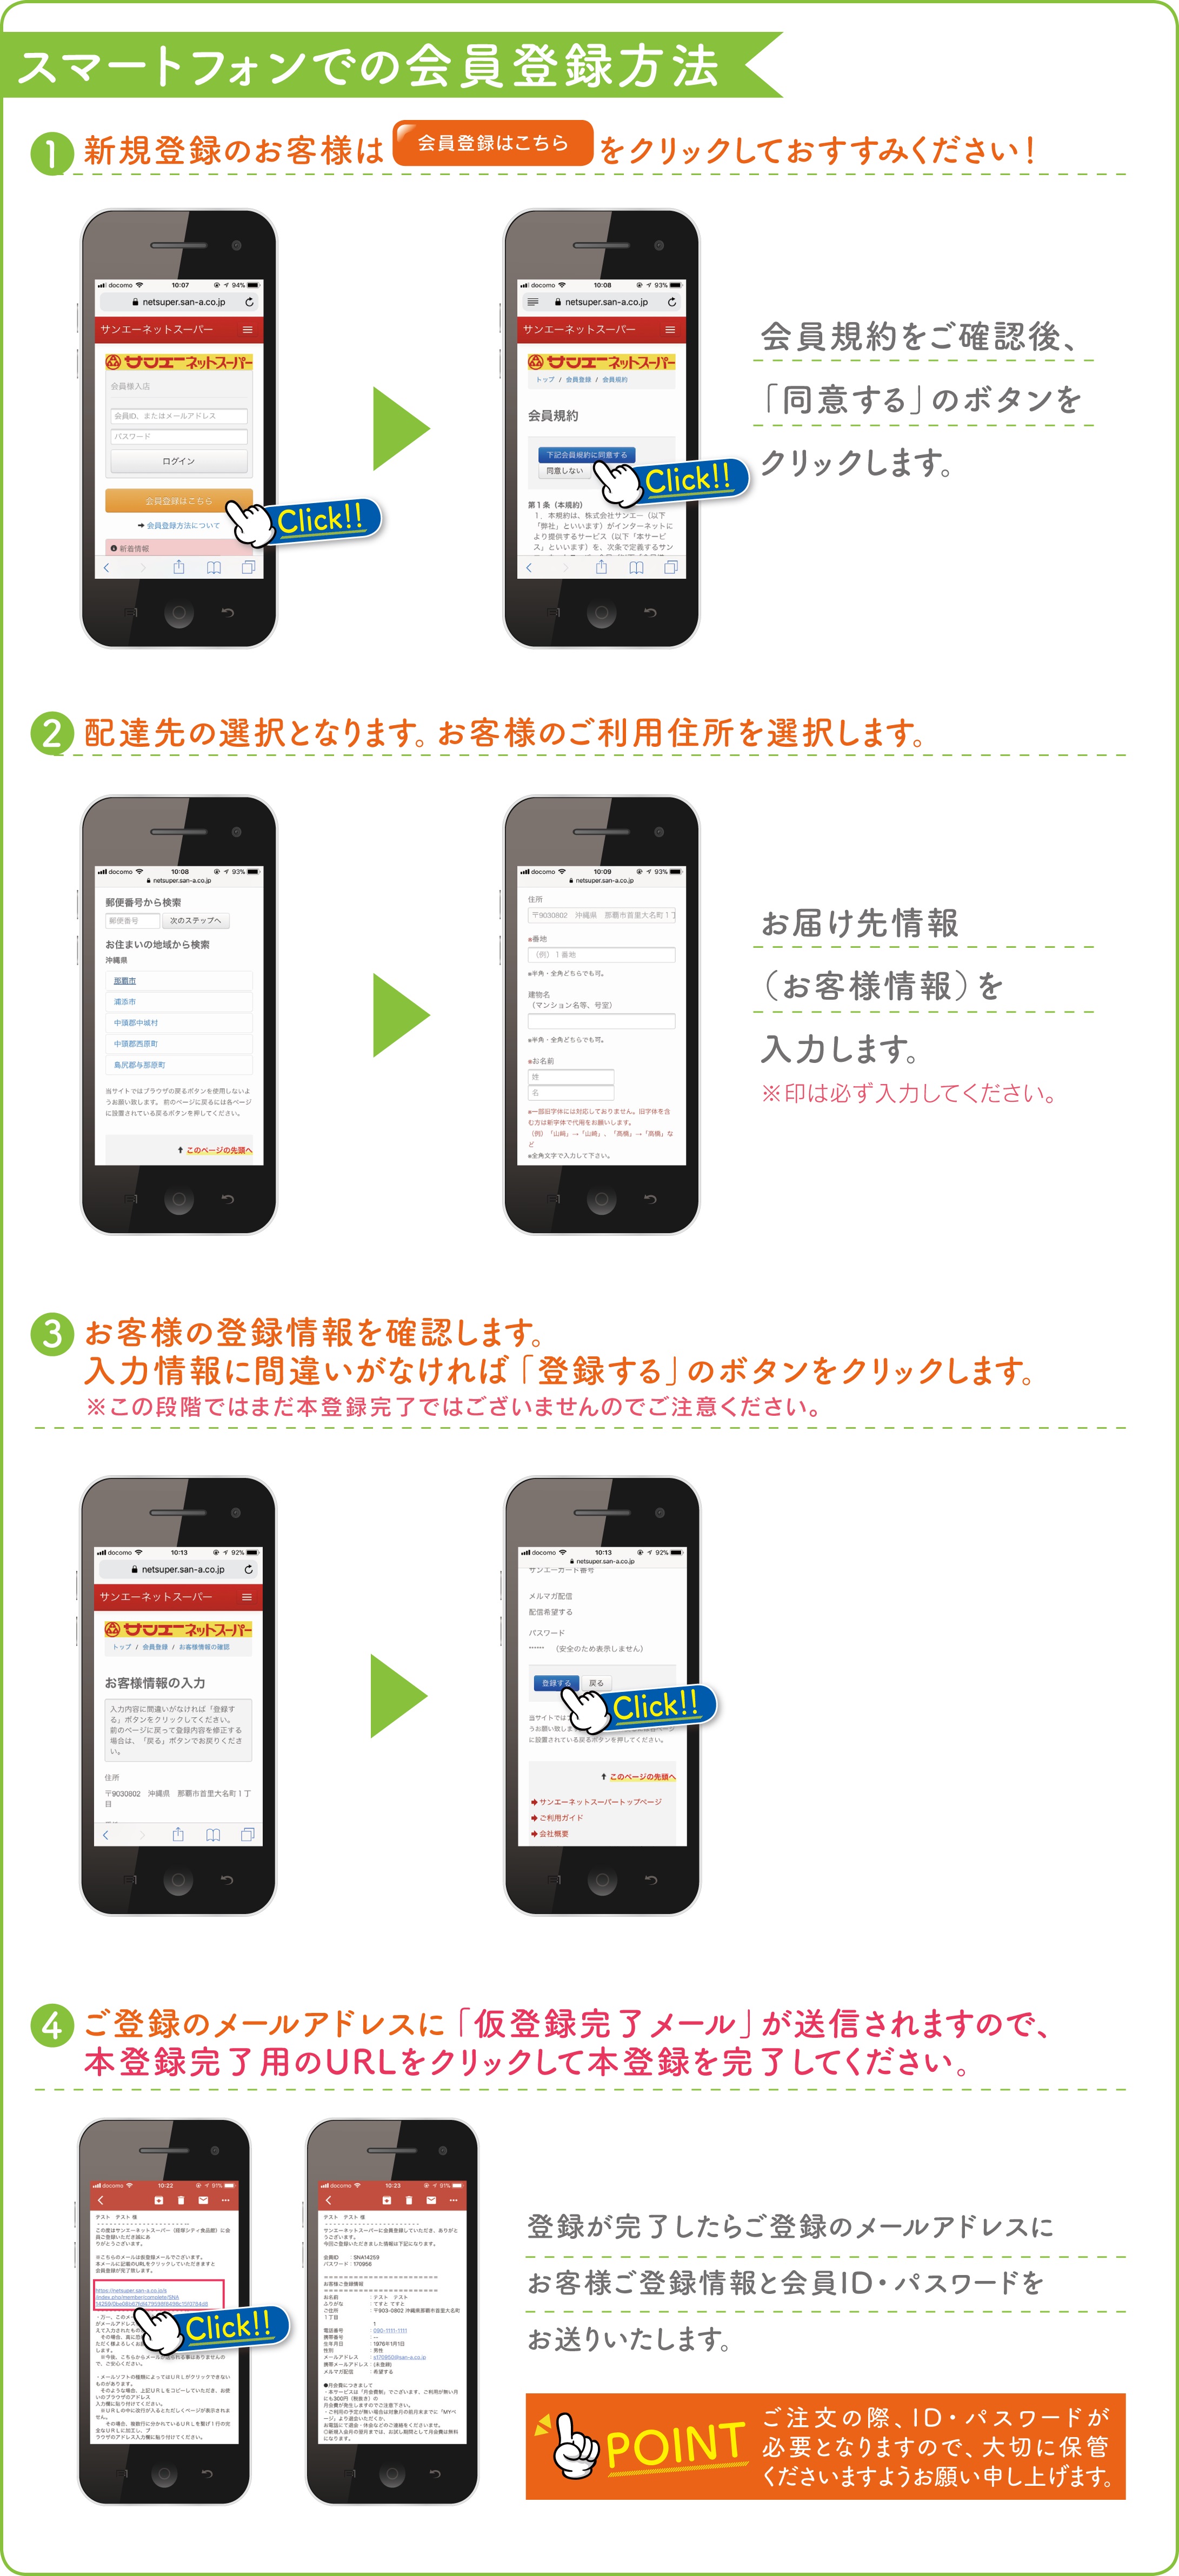 netsuper-smartphon